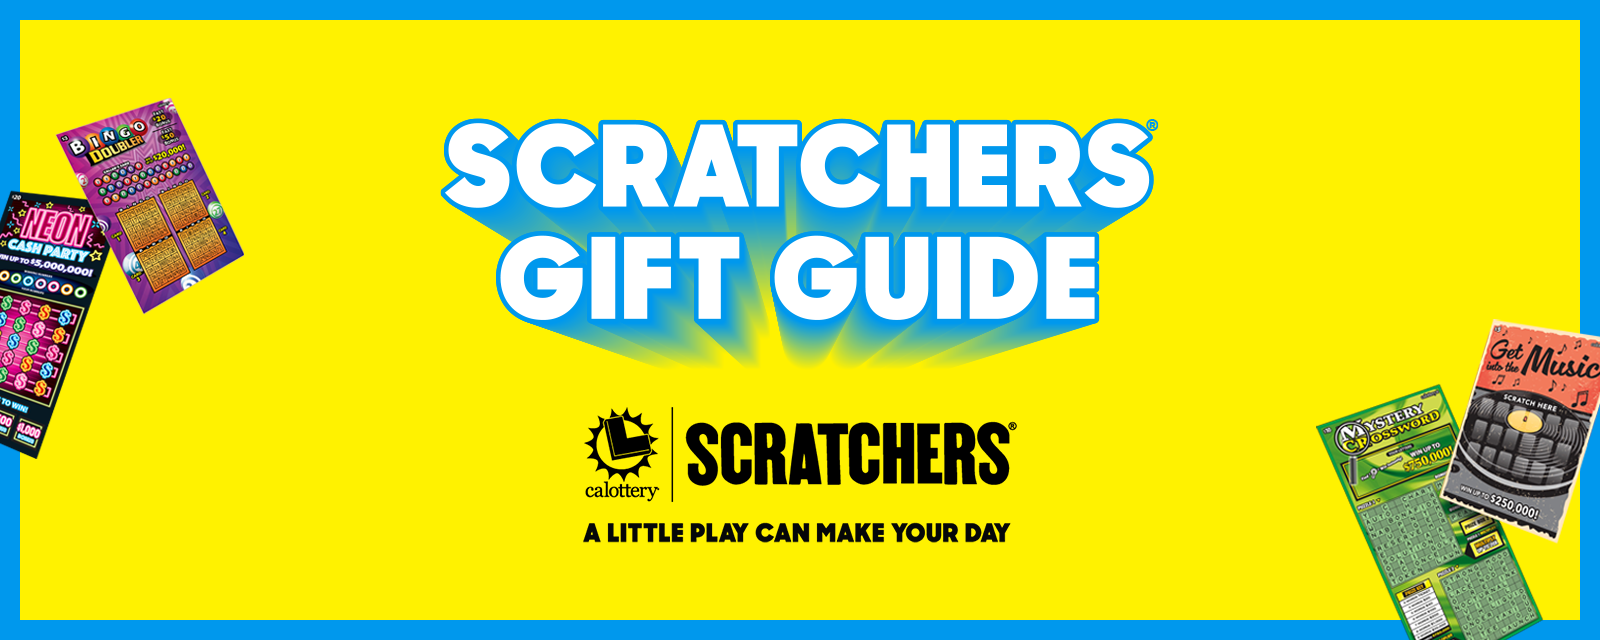 Scratchers Gift Guide